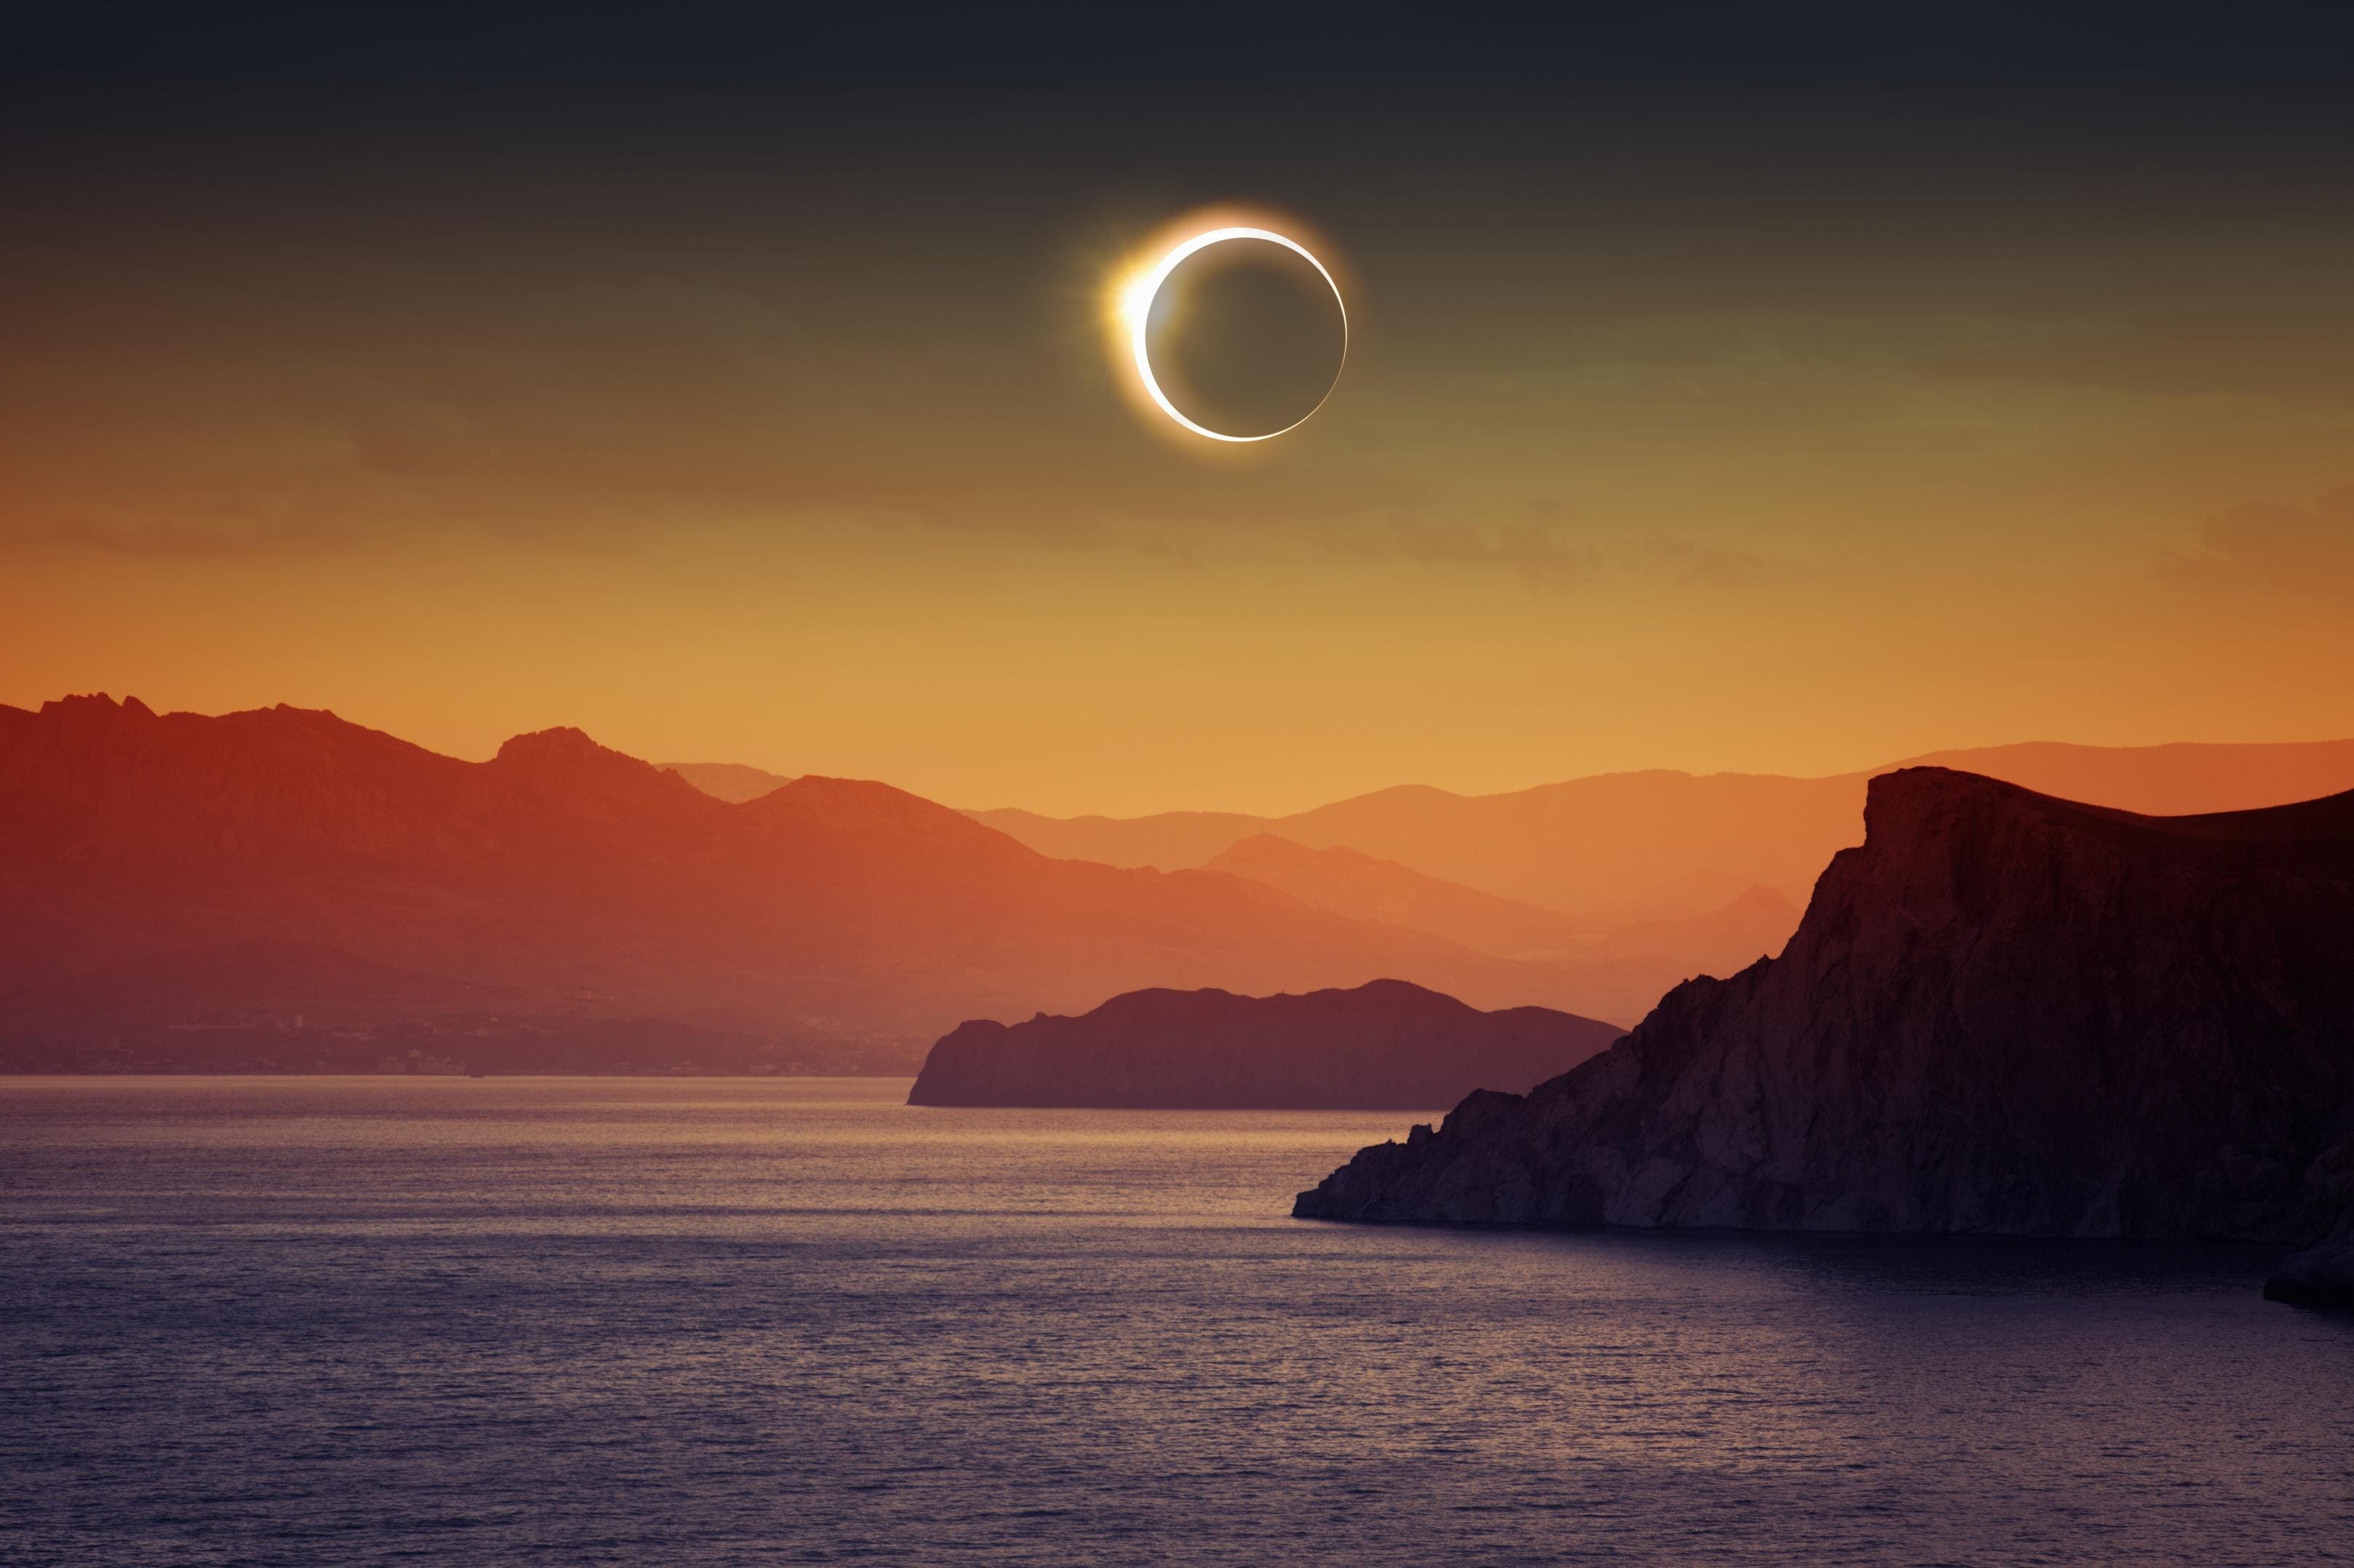 solar eclipse of december 4, 2021